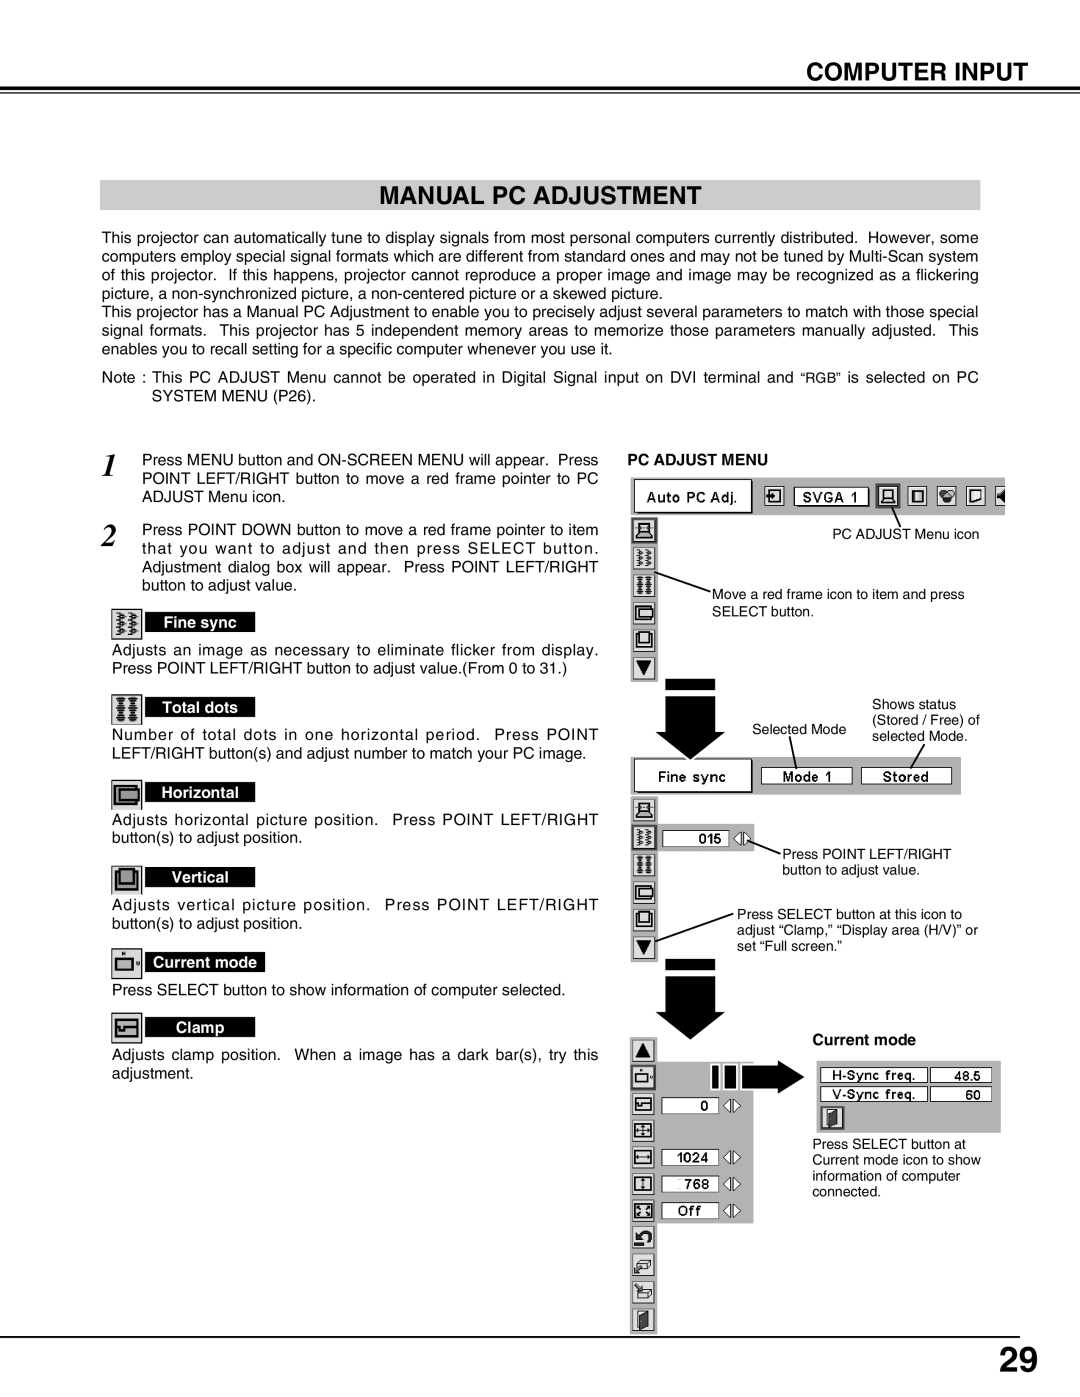 Eiki LC-SX4LA Computer Input Manual Pc Adjustment, Fine sync, Total dots, Horizontal, Vertical, Current mode, Clamp 